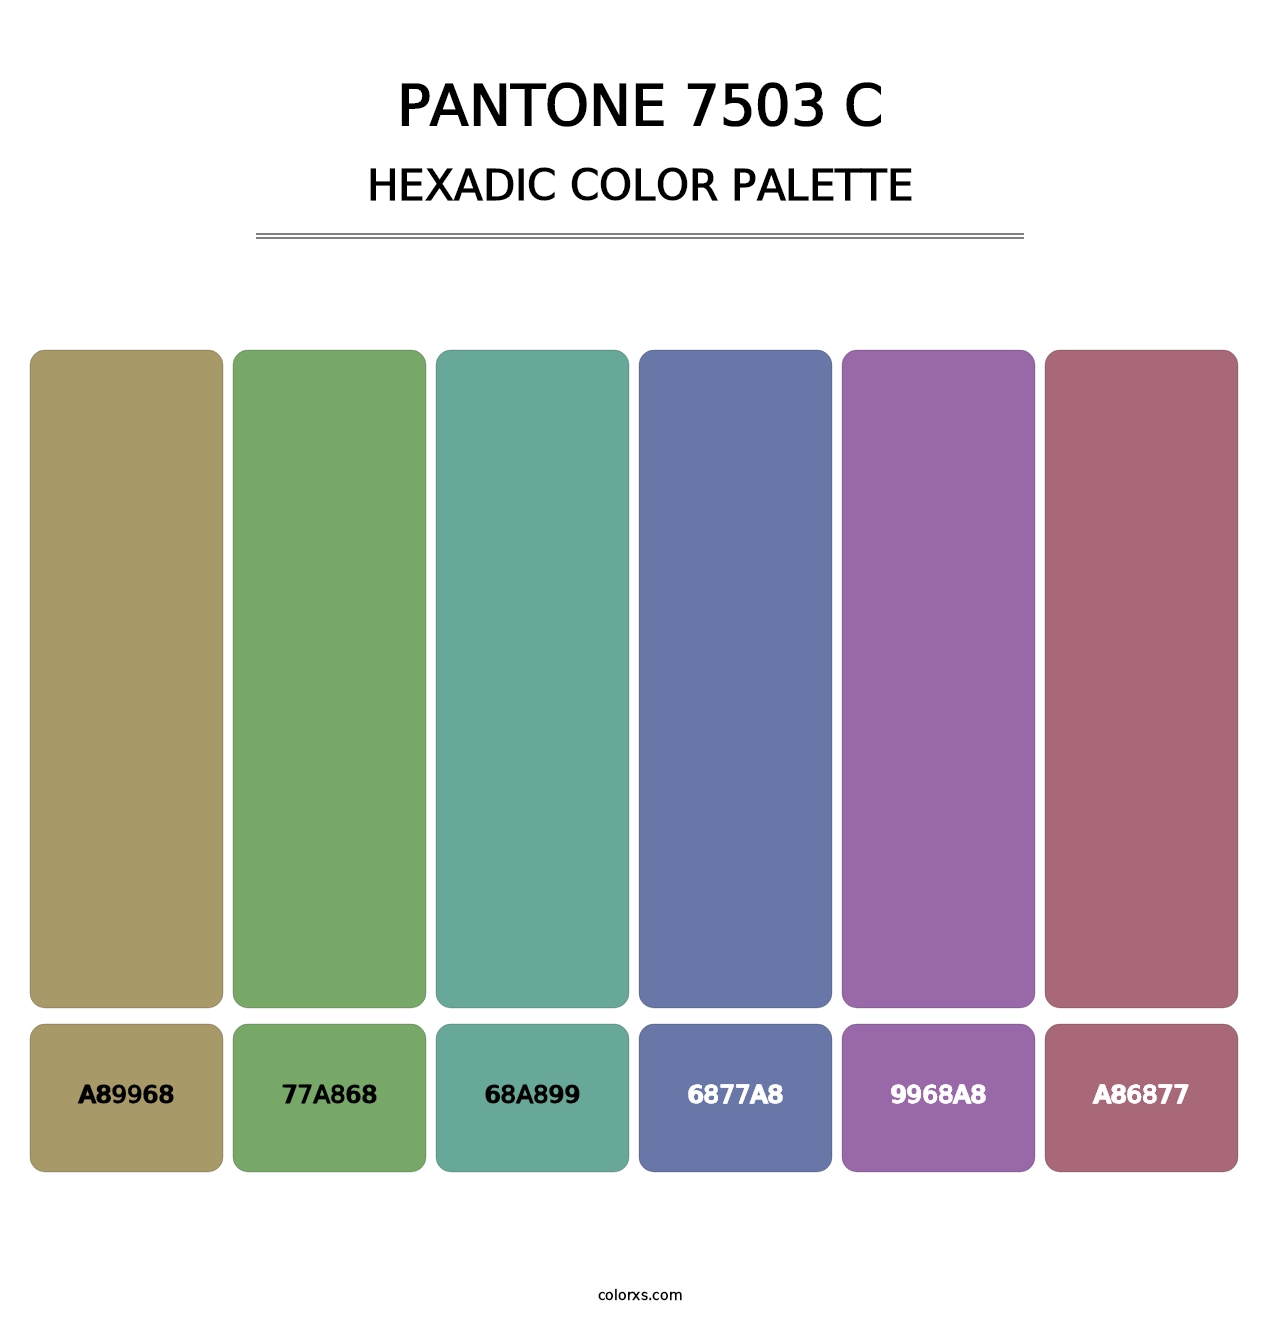 PANTONE 7503 C - Hexadic Color Palette